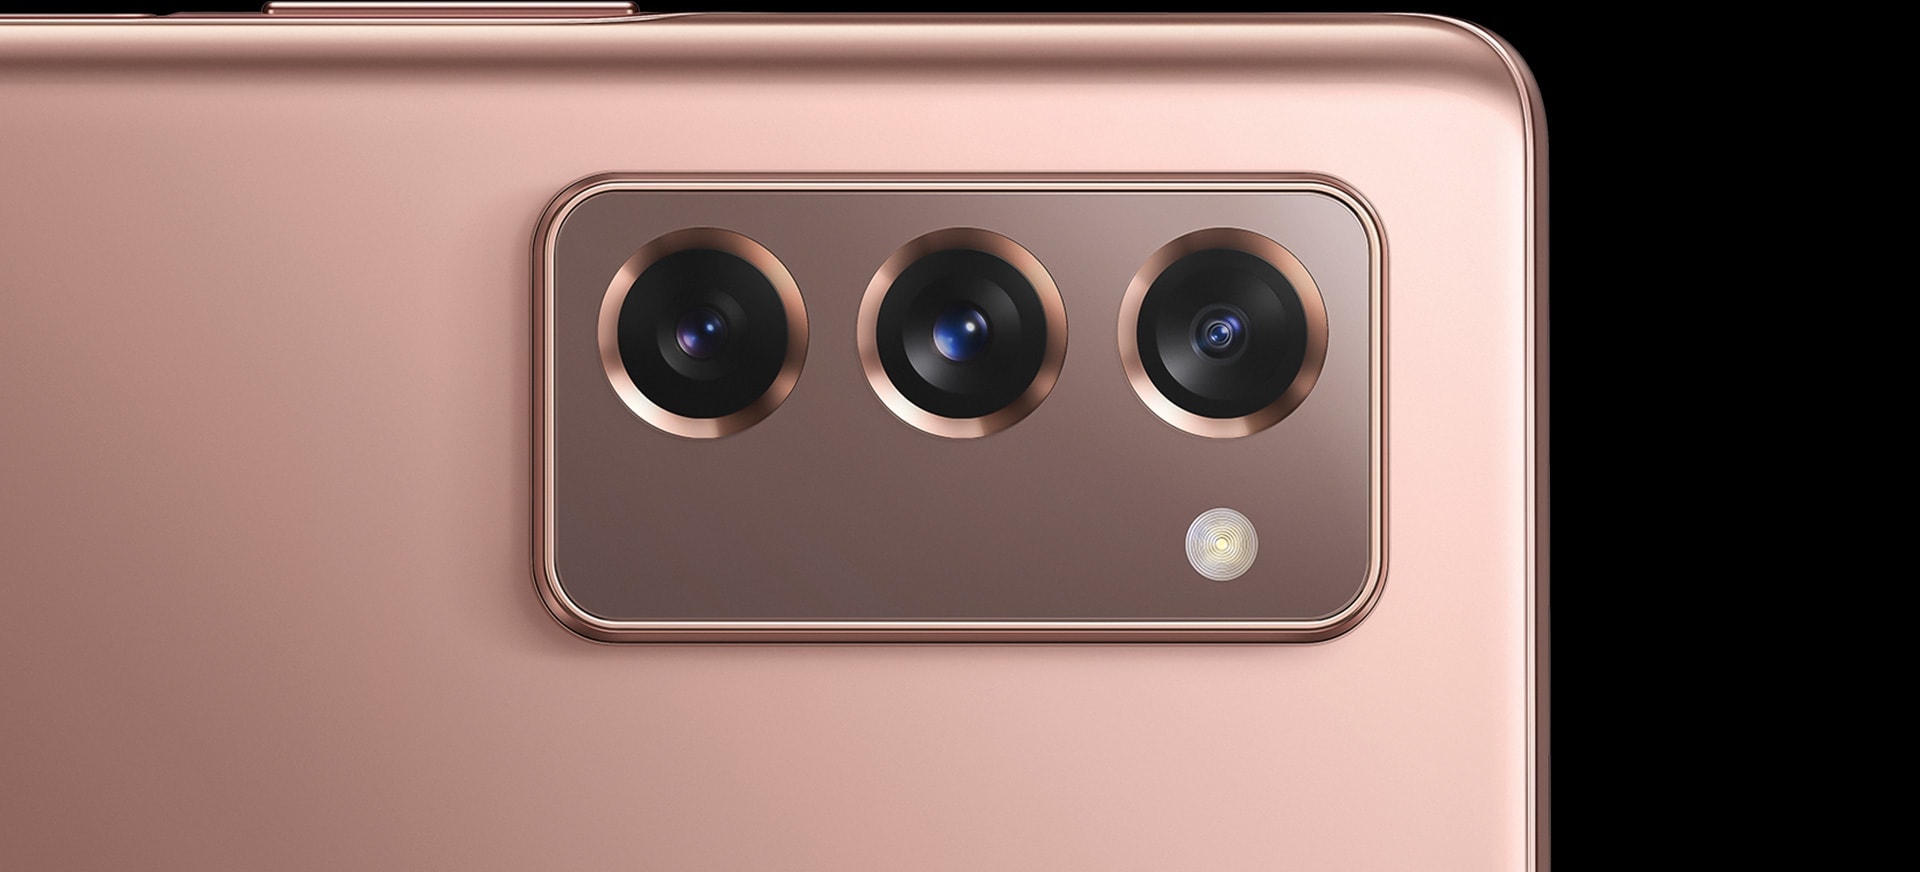 The rear triple camera on Galaxy Z Fold2 in Mystic Bronze.